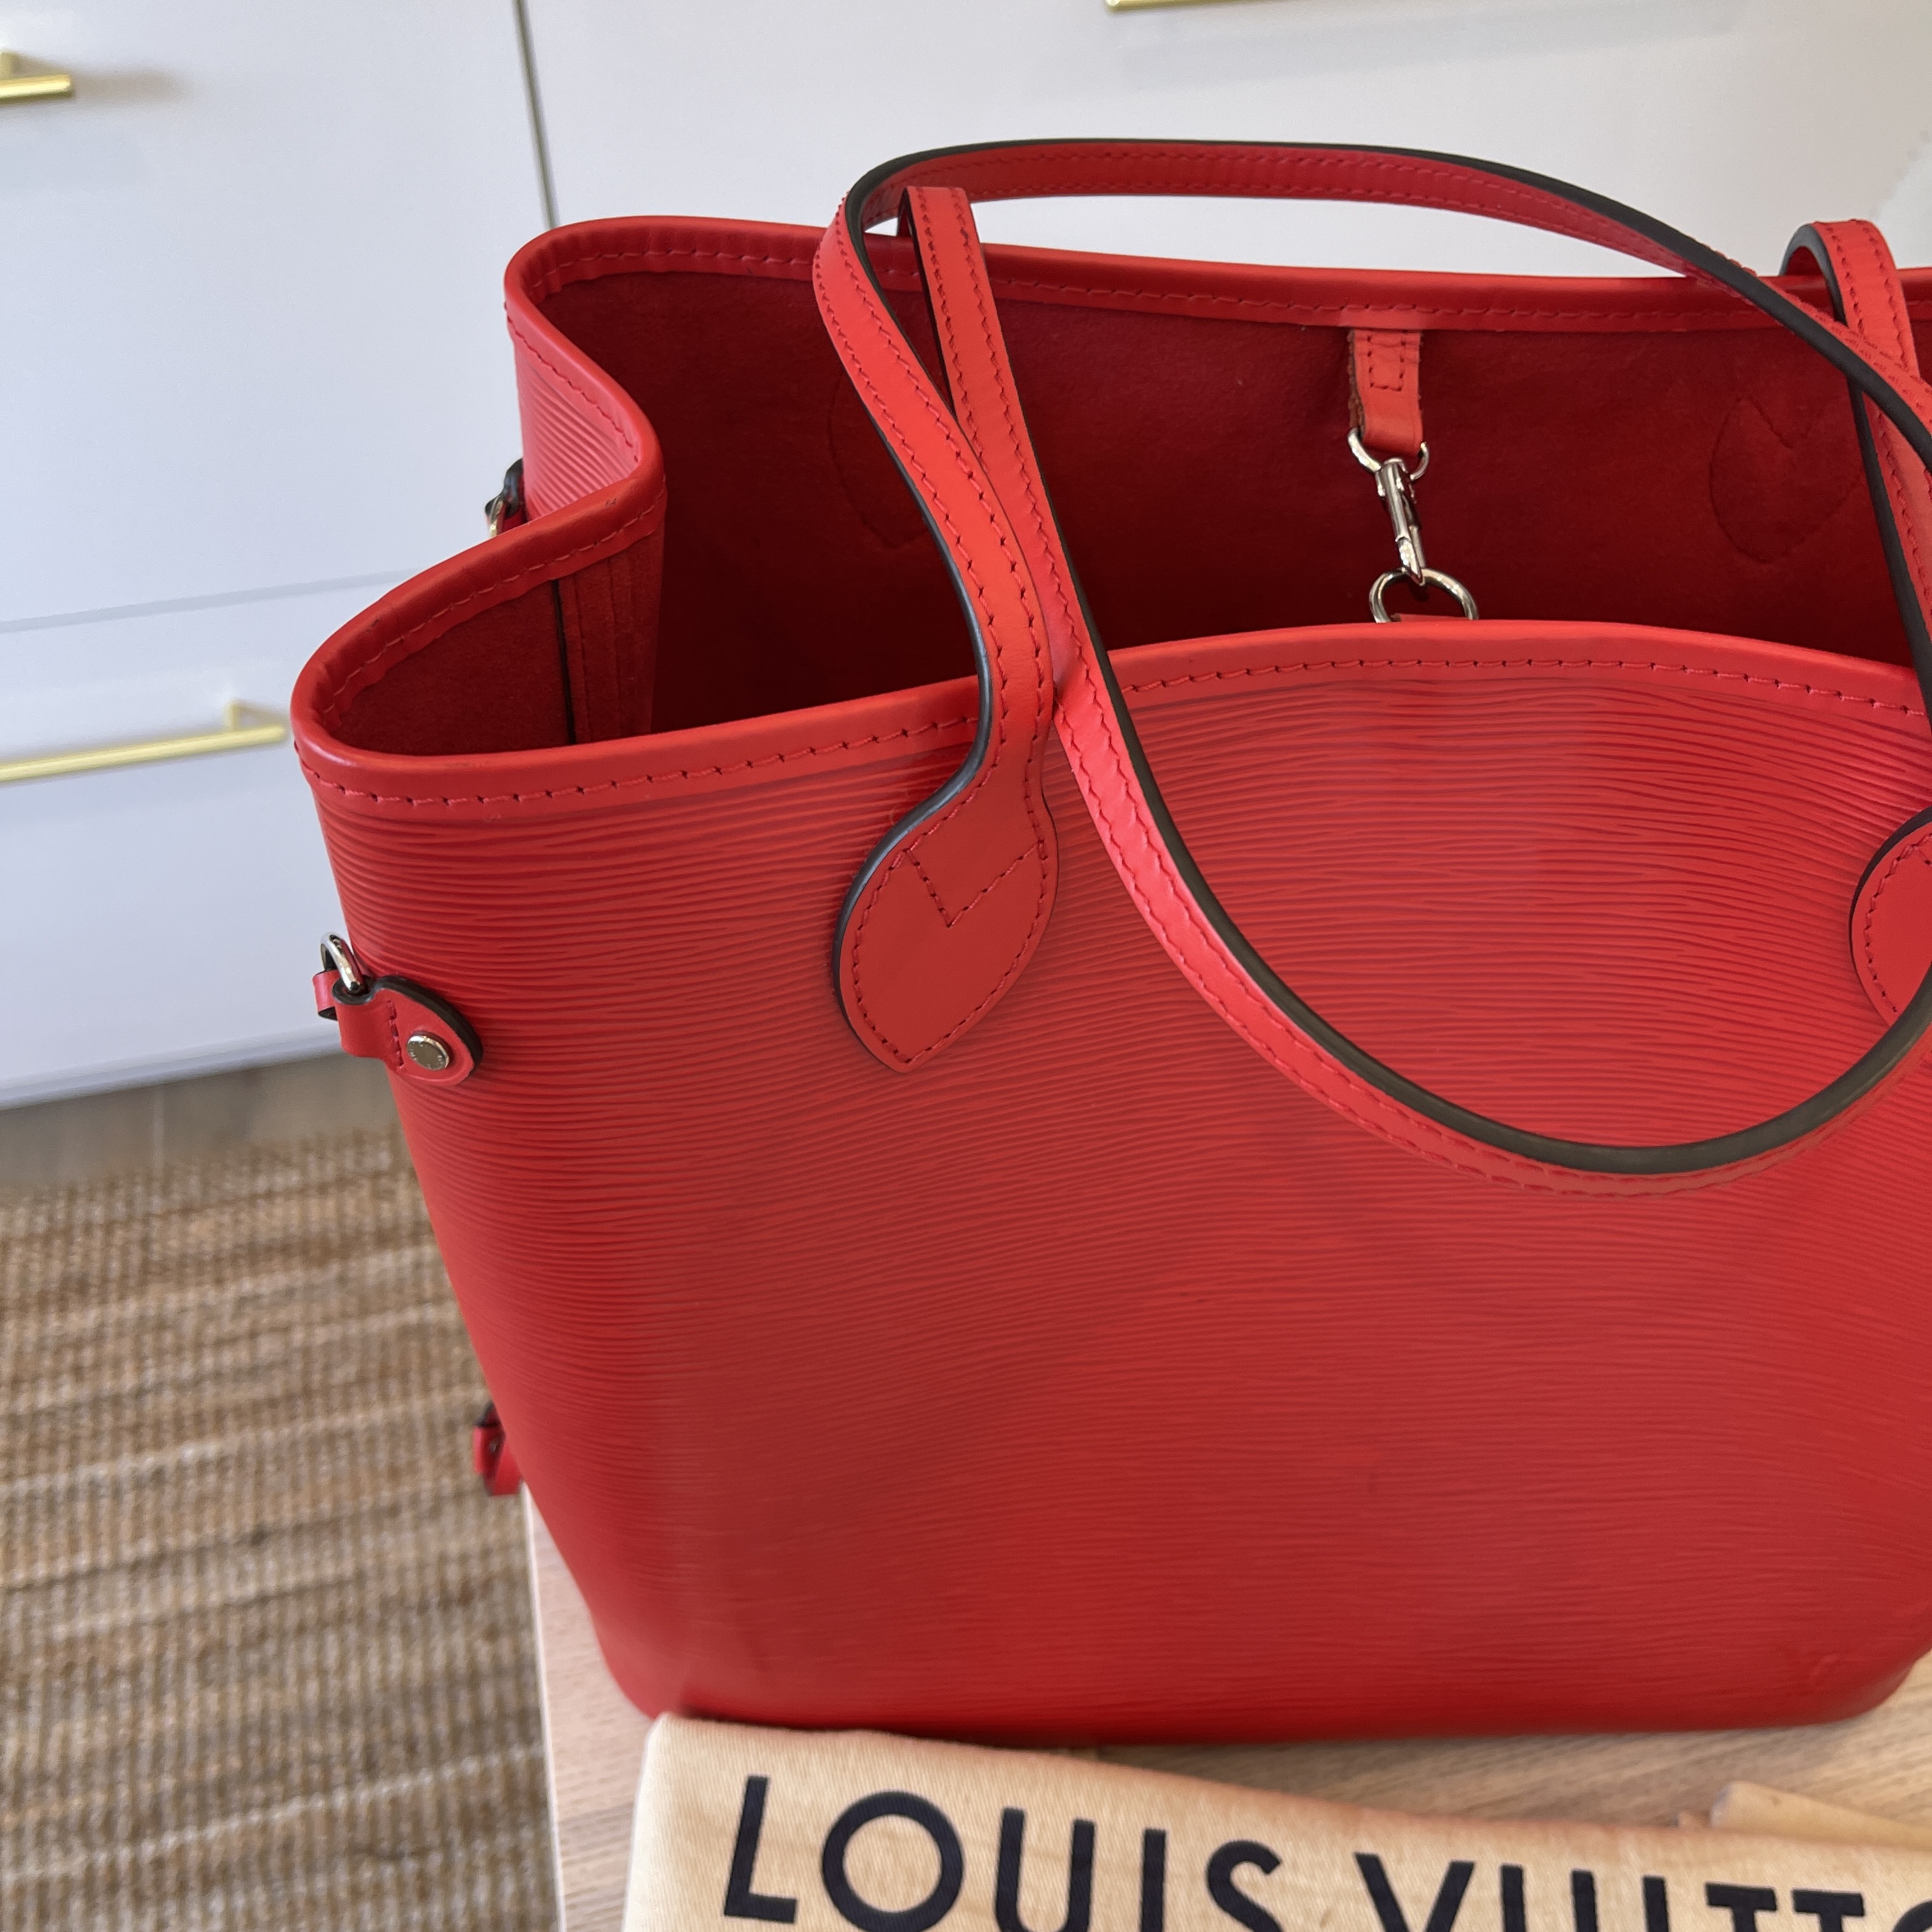 Louis Vuitton Neverfull Medium Model Shopping Bag in Red EPI Leather